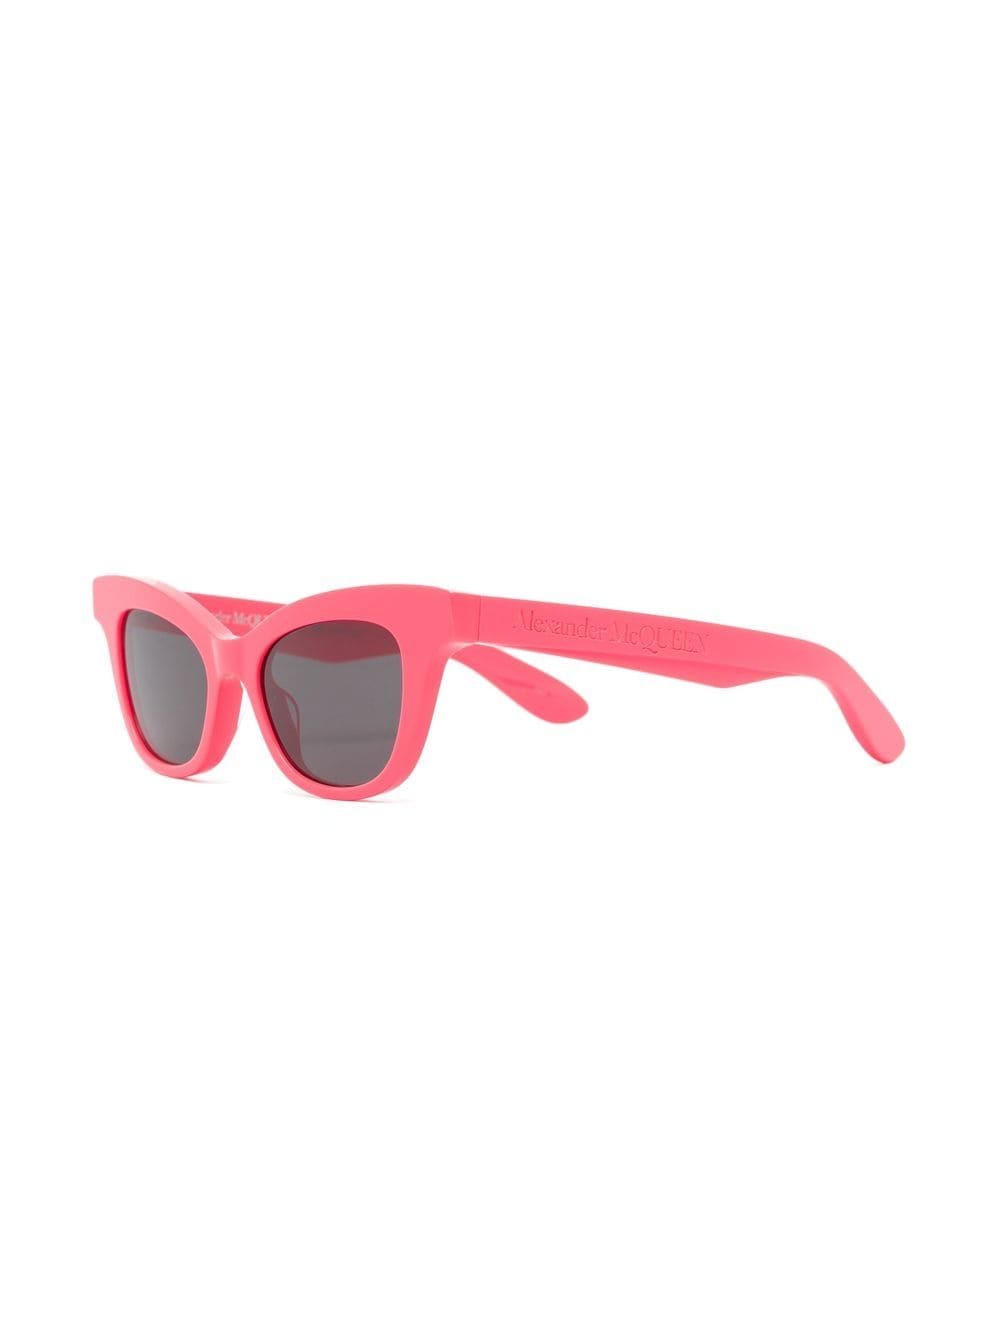 Tinted cat-eye sunglasses